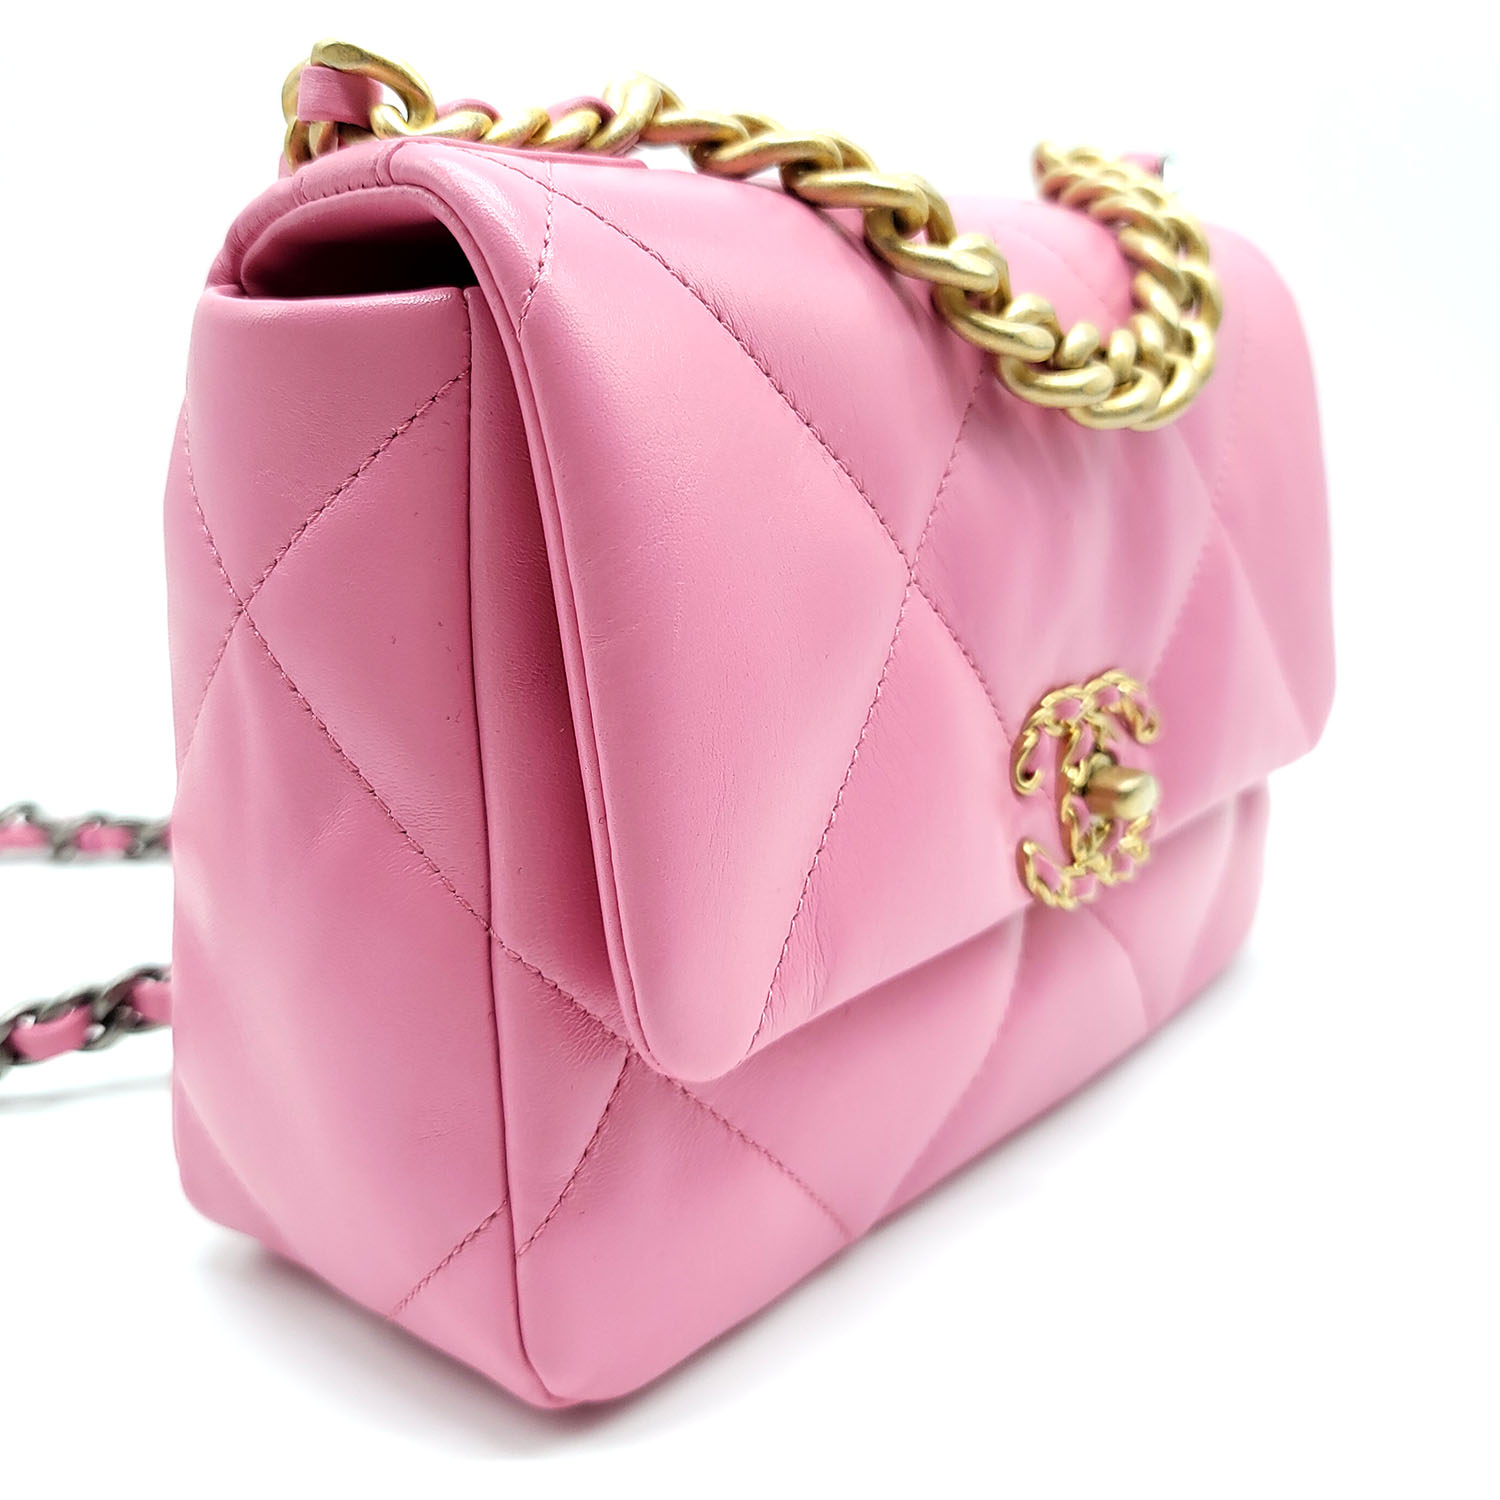 hot pink chanel clutch bag